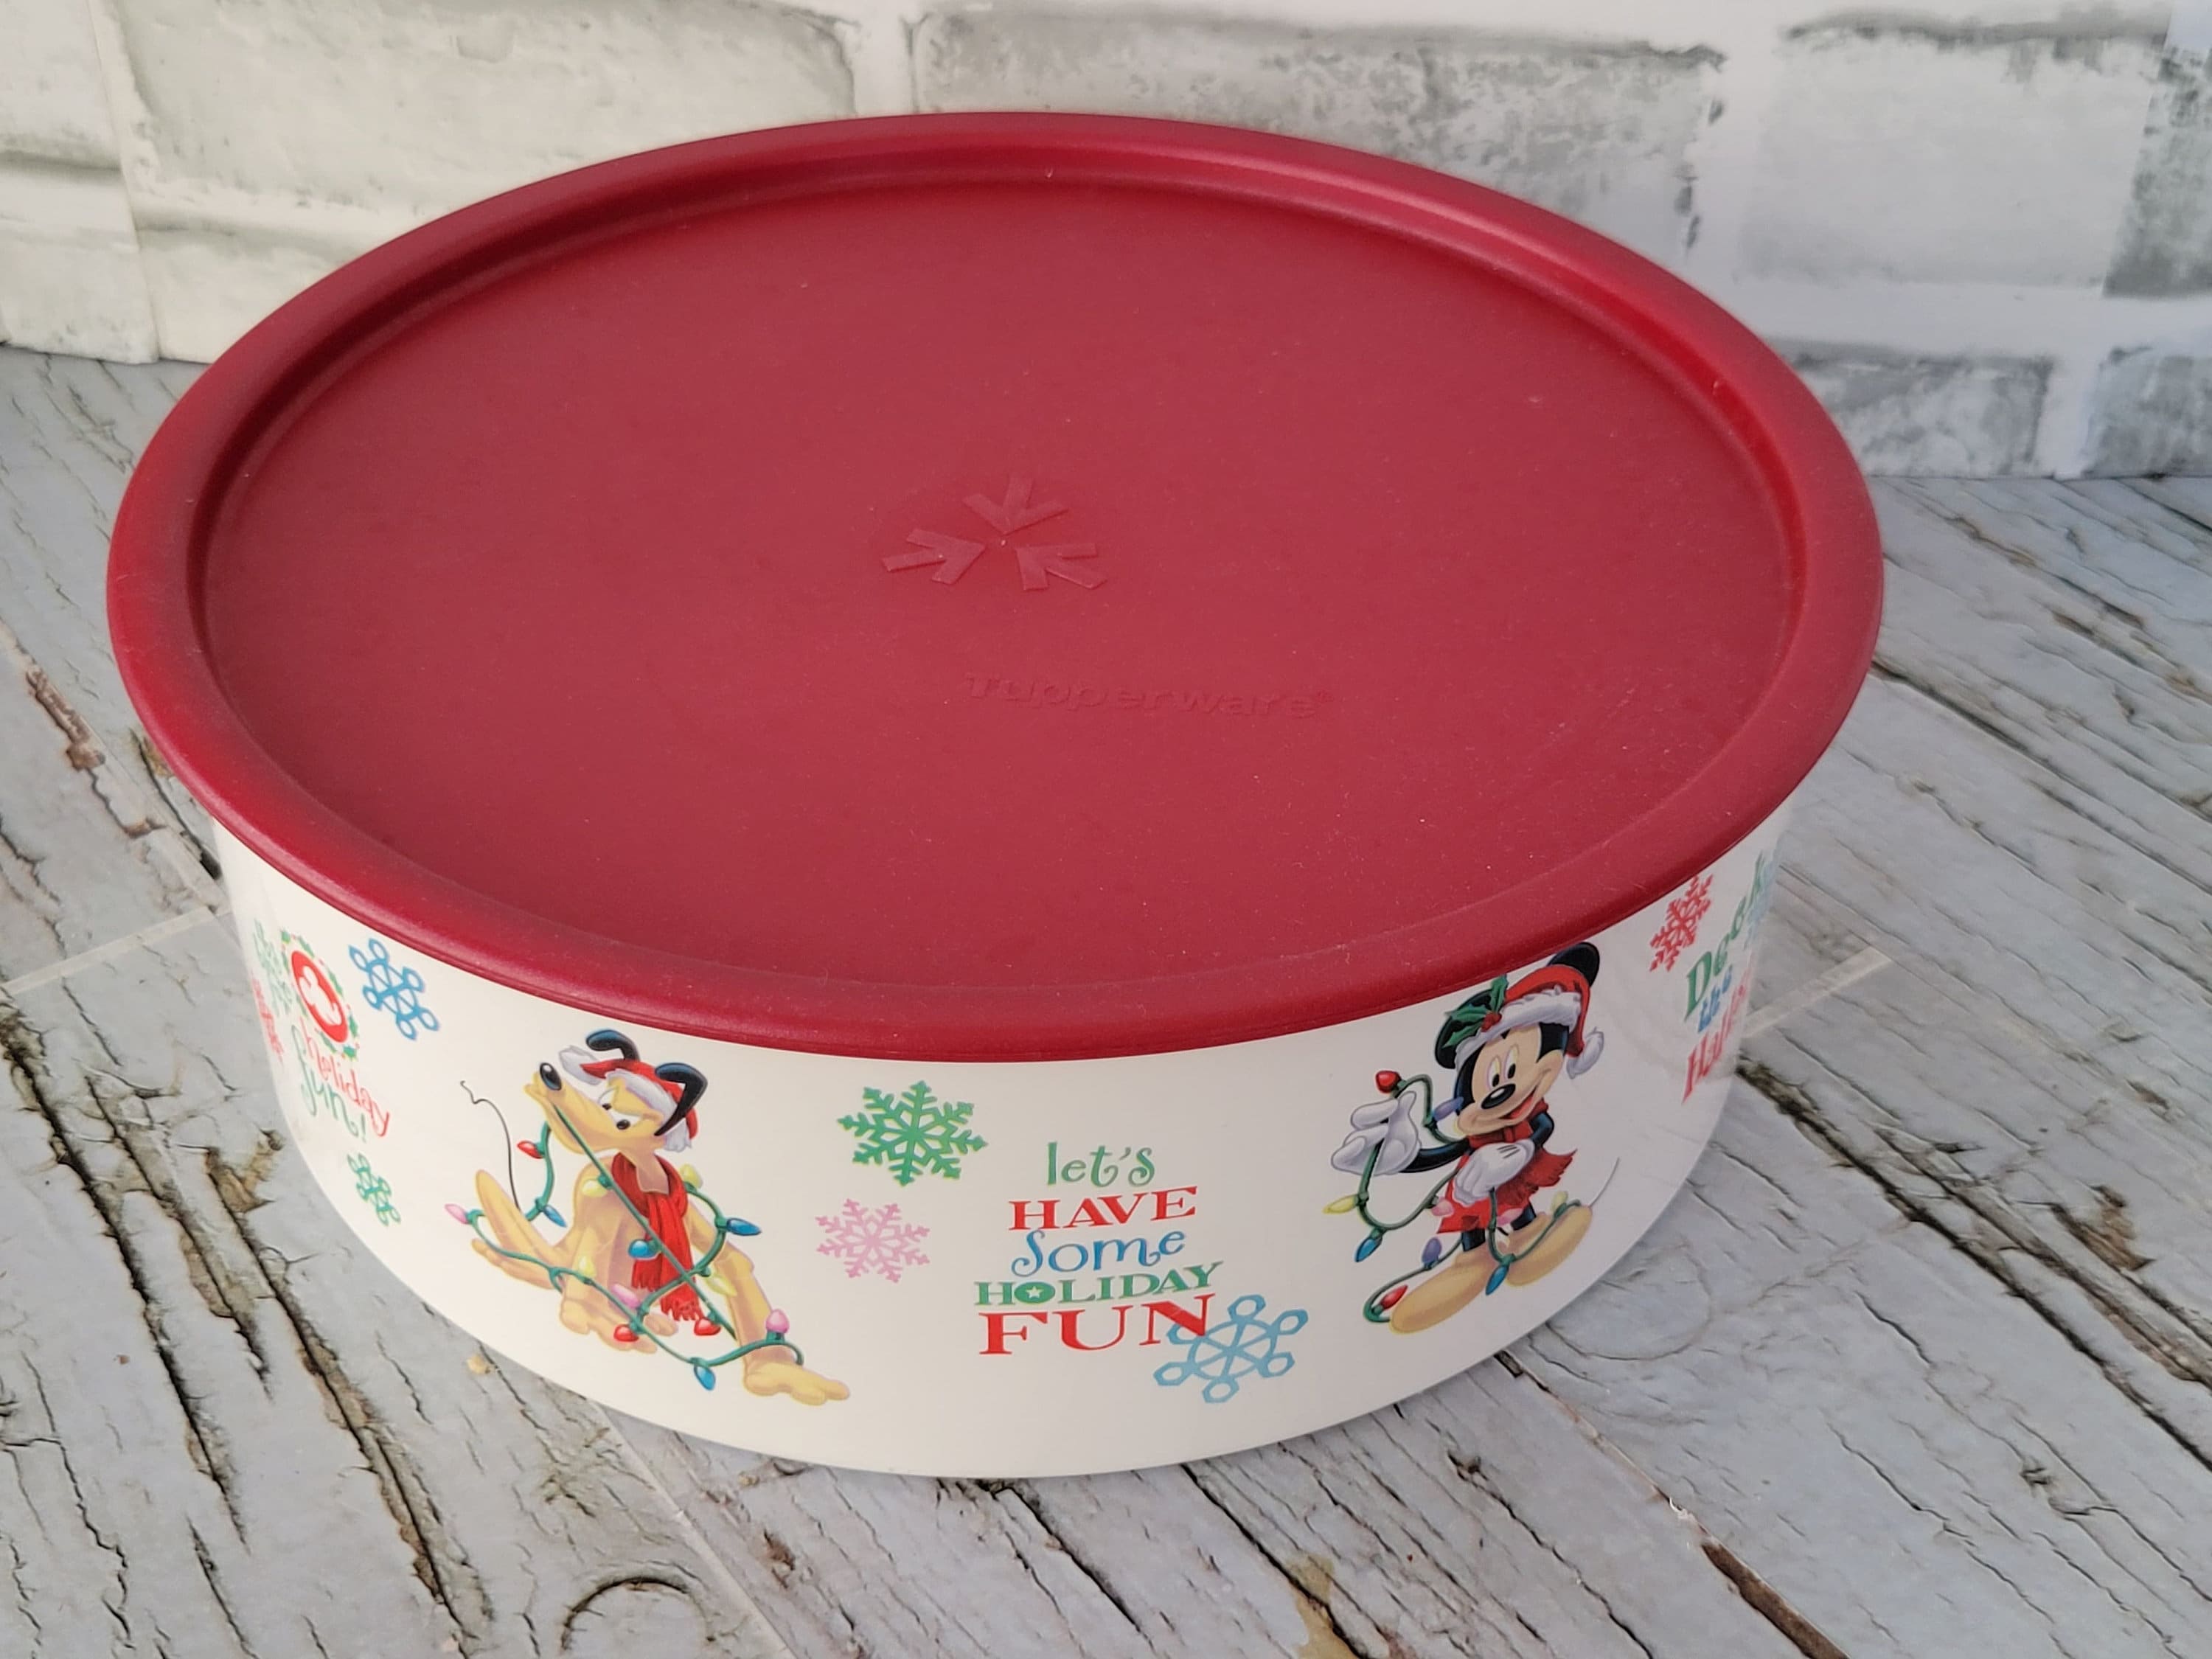 Tupperware Tupperware Disney Mickey and Minnie